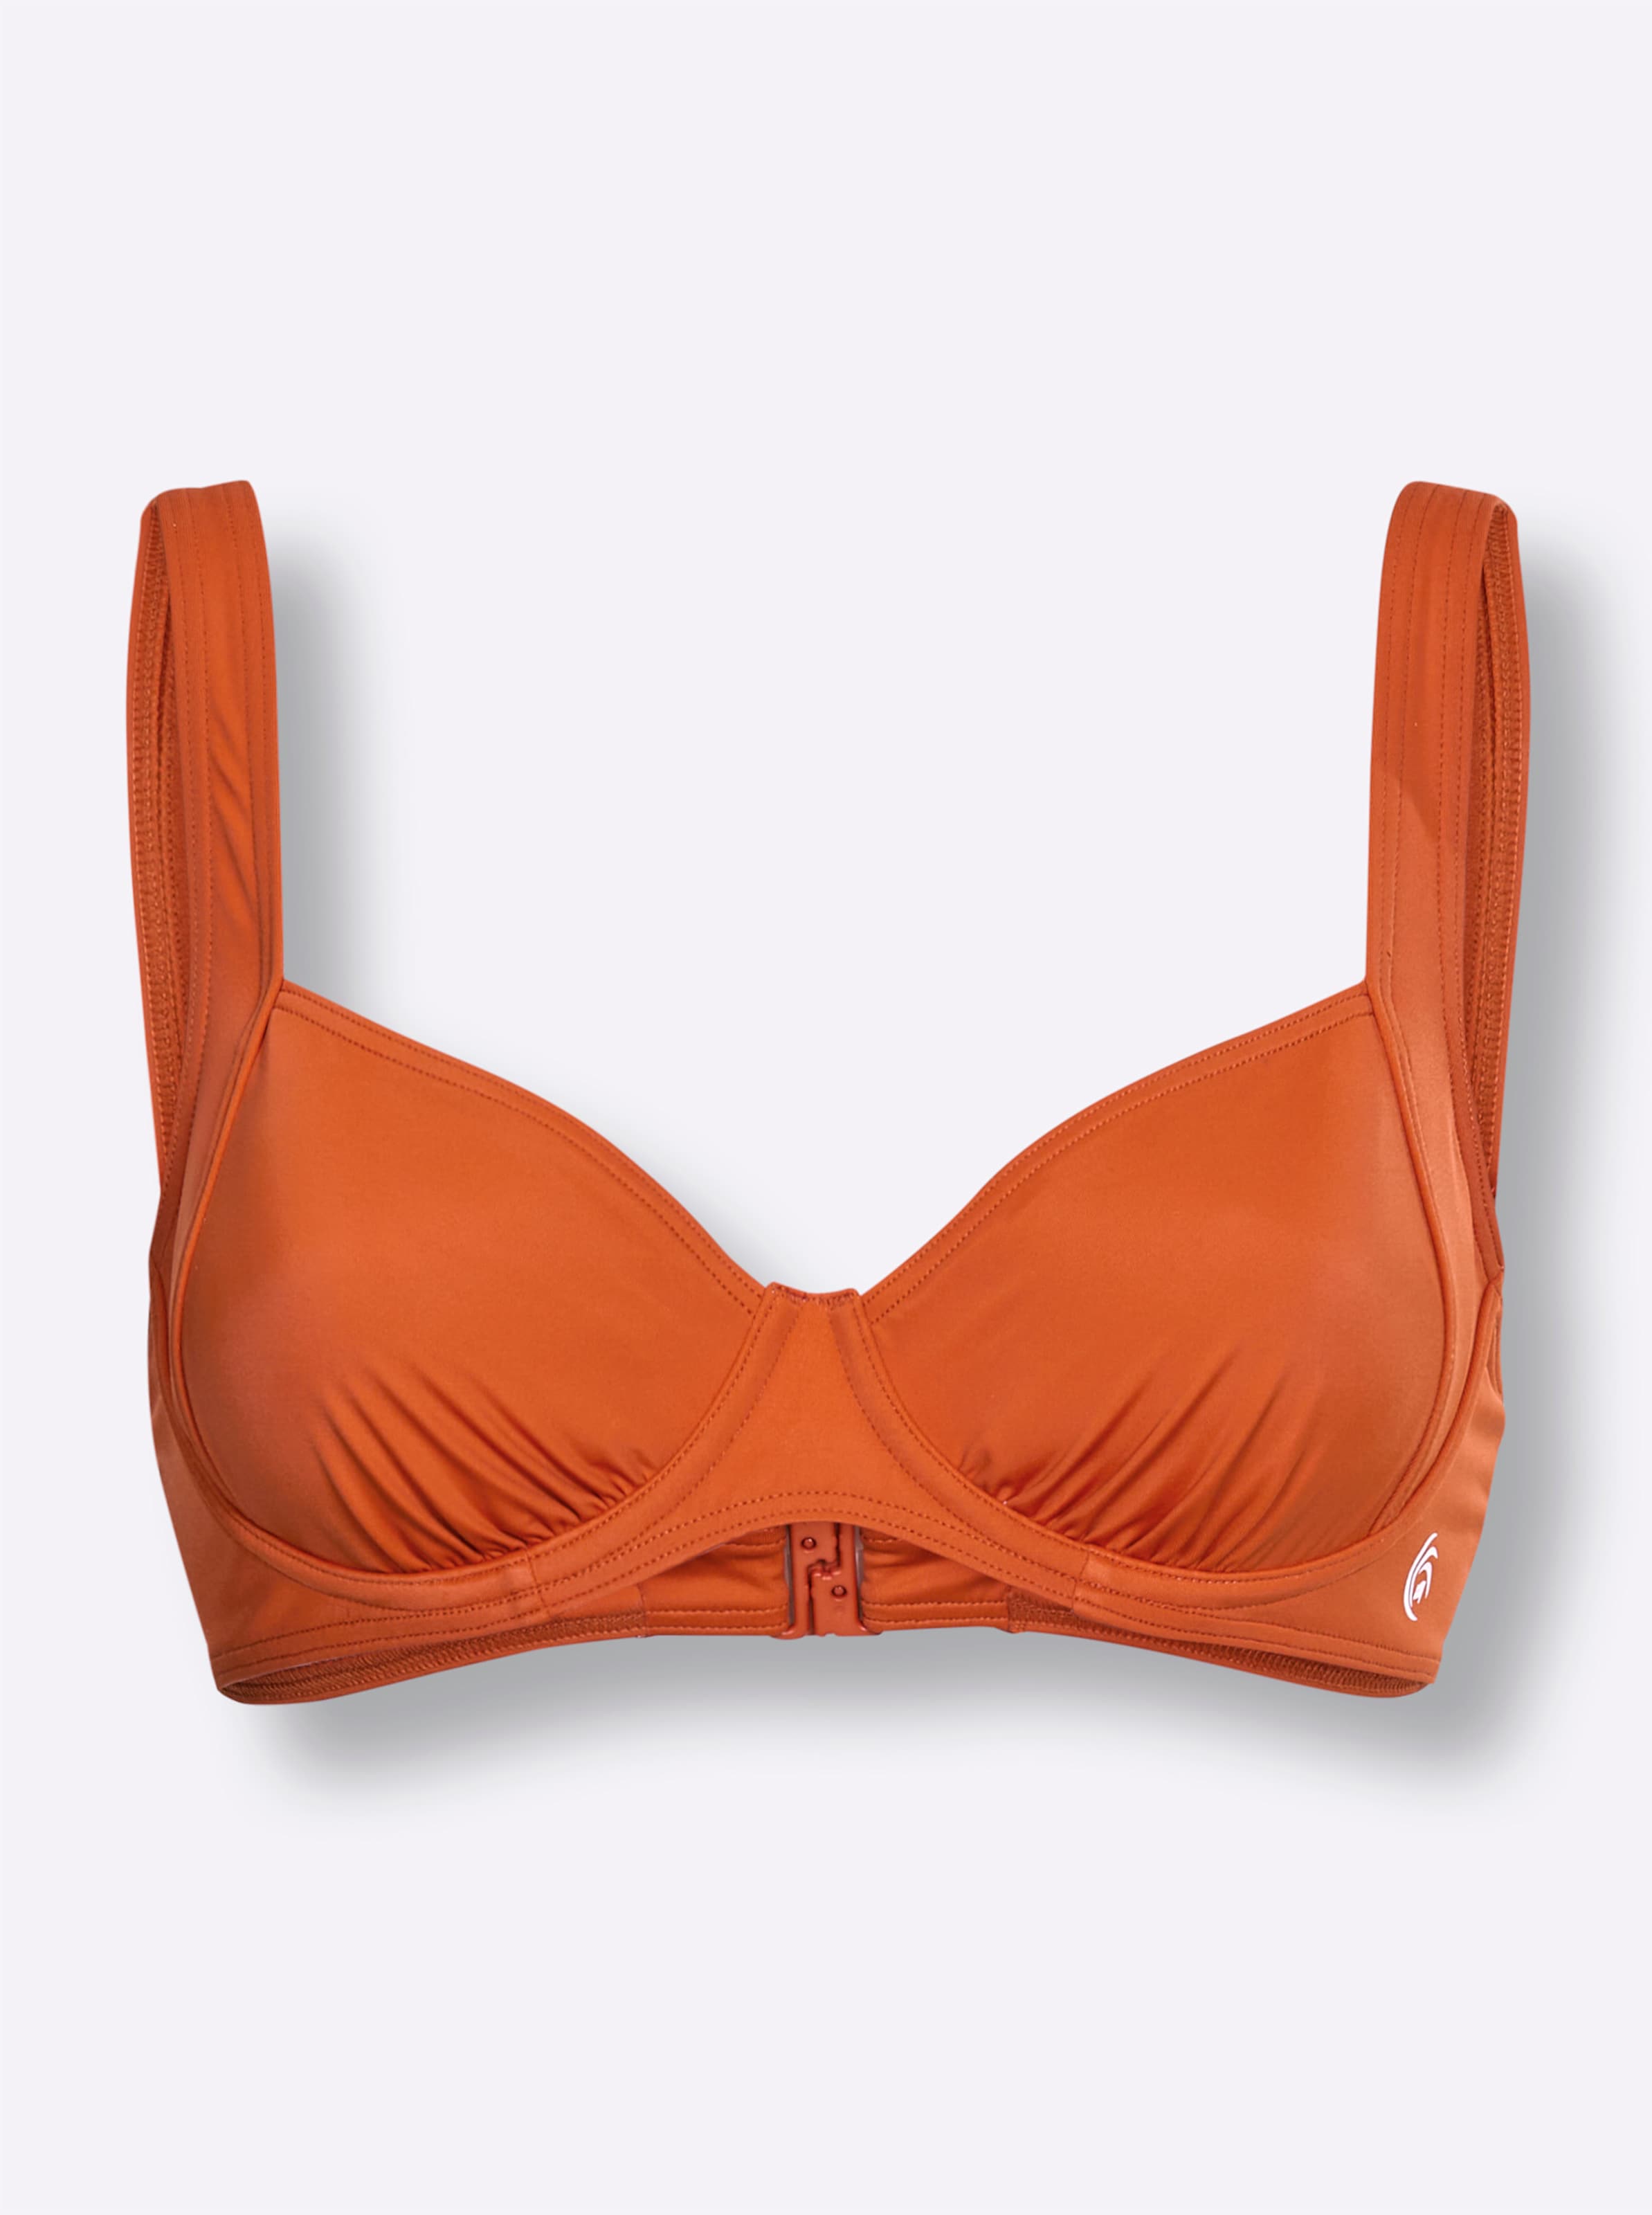 Witt Weiden Damen Bikini Oberteil orange  - Onlineshop Witt Weiden